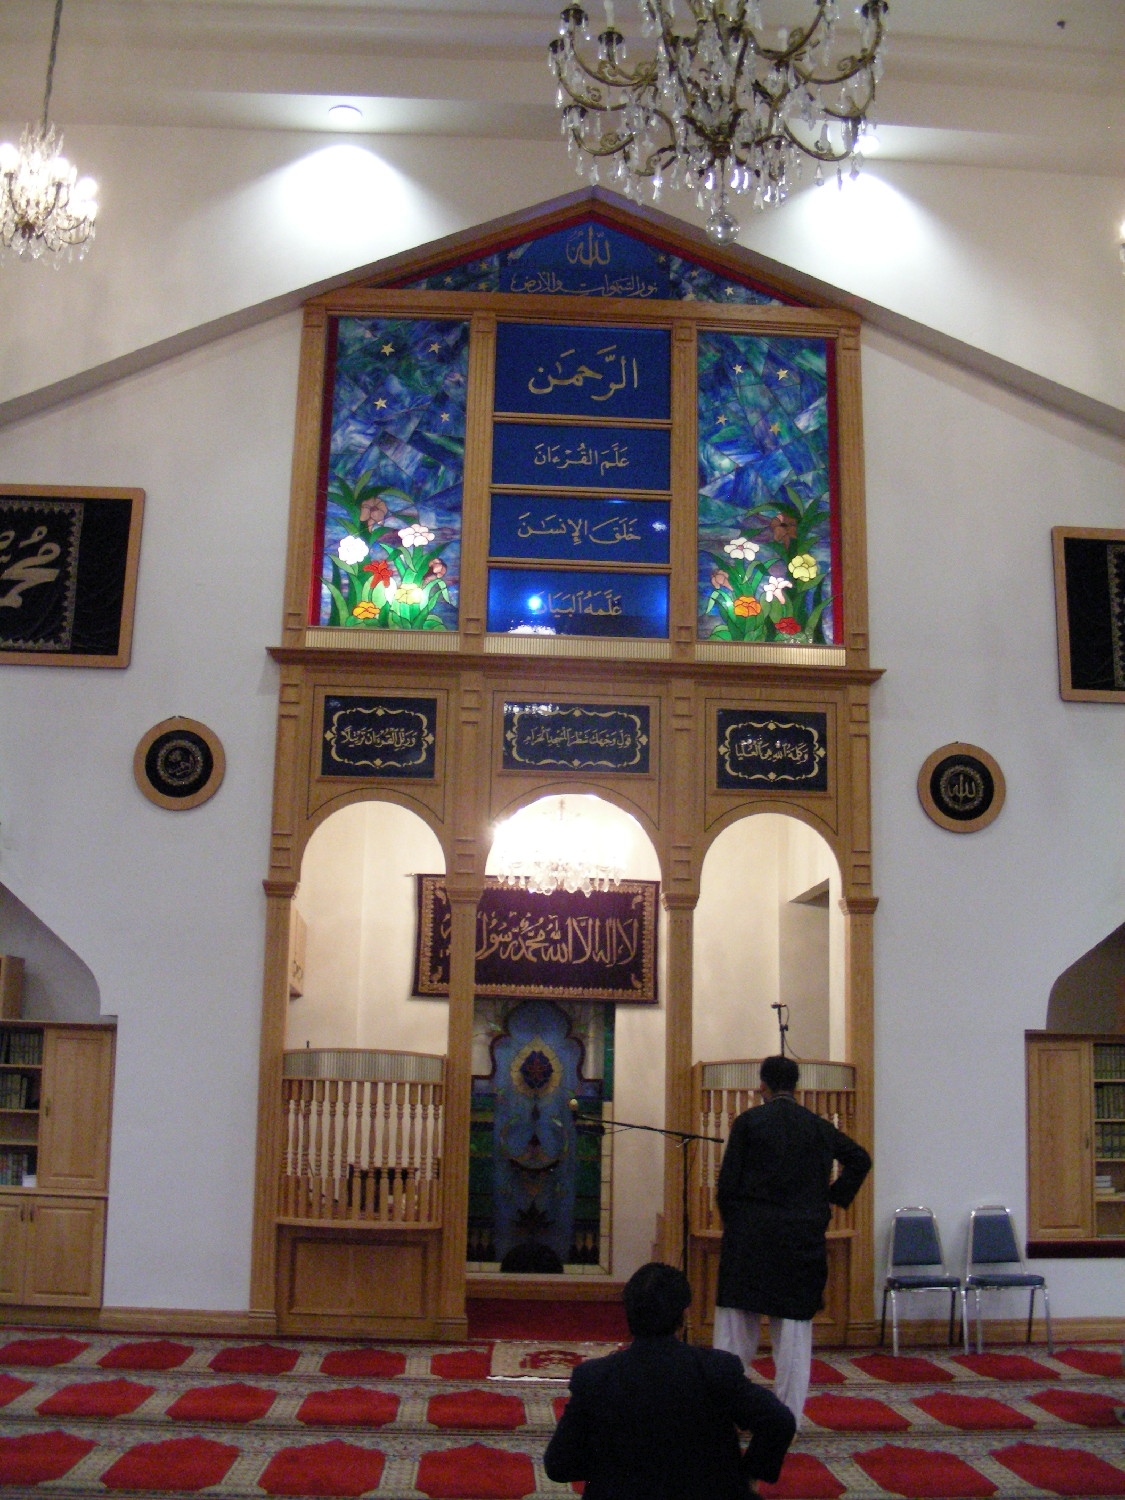 Islamic Society of Orange County - View of mihrab and minbar